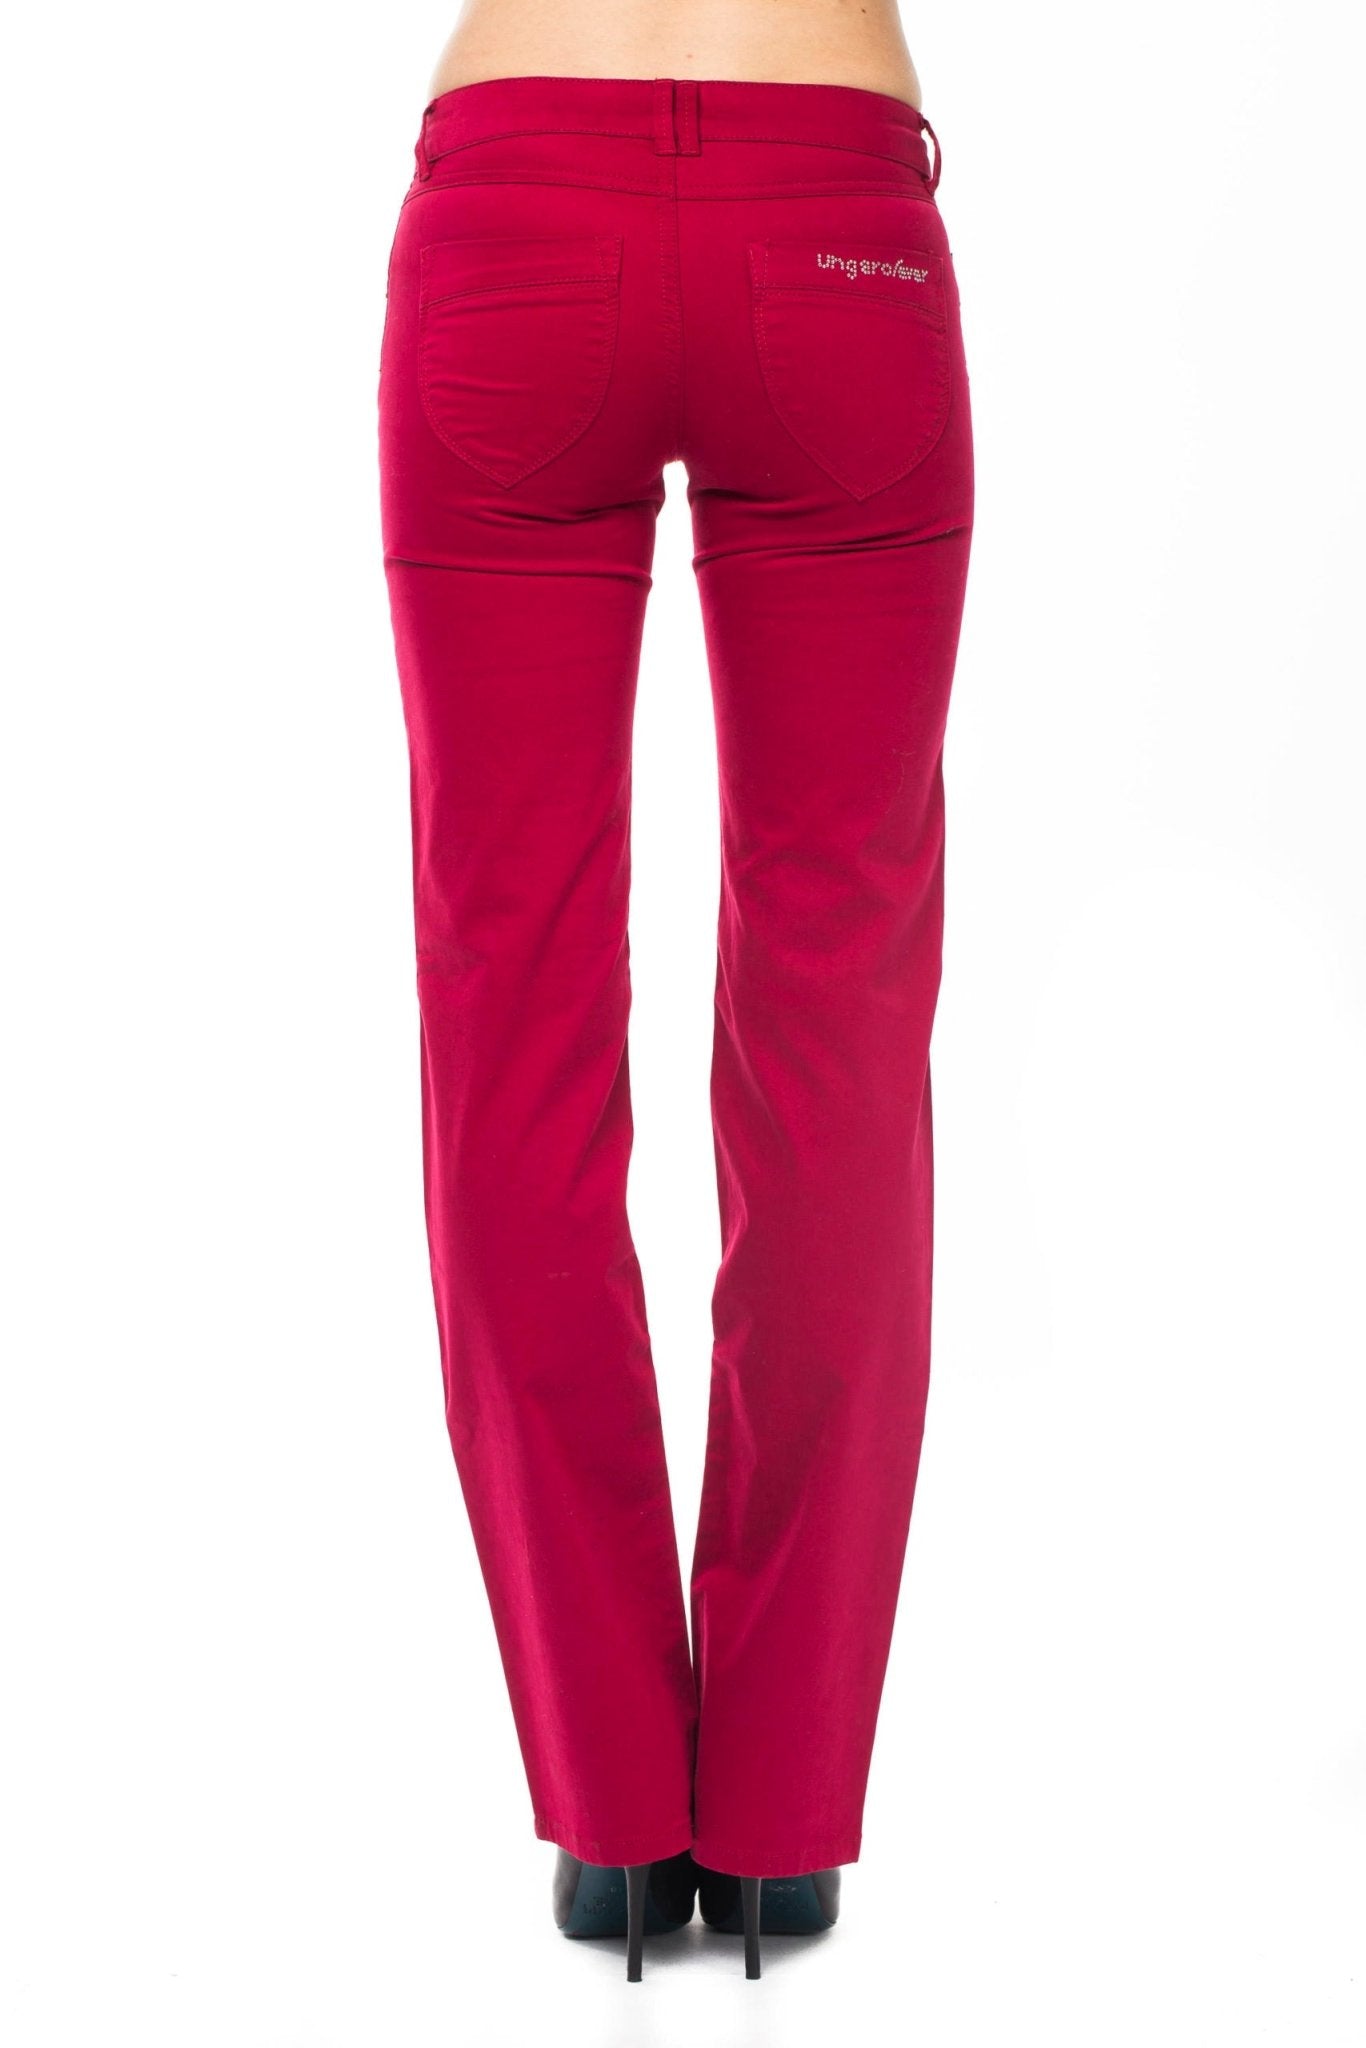 Ungaro Fever Red Cotton Jeans & Pant - Fizigo